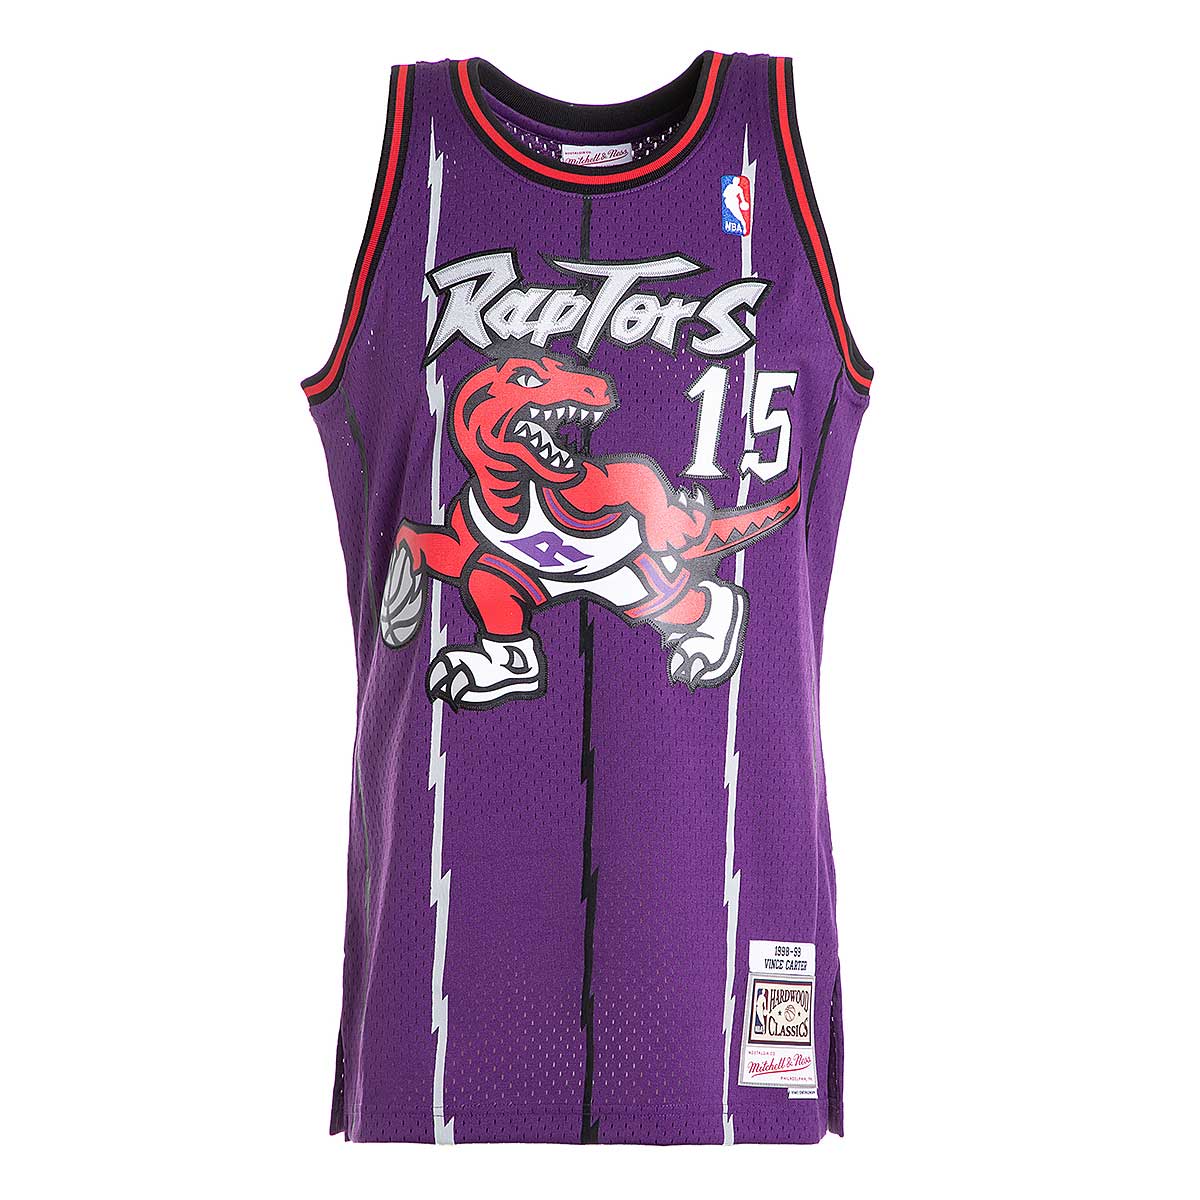 Vince Carter #15 Toronto Raptors Basketball Jersey White Purple Jersey Stitched 